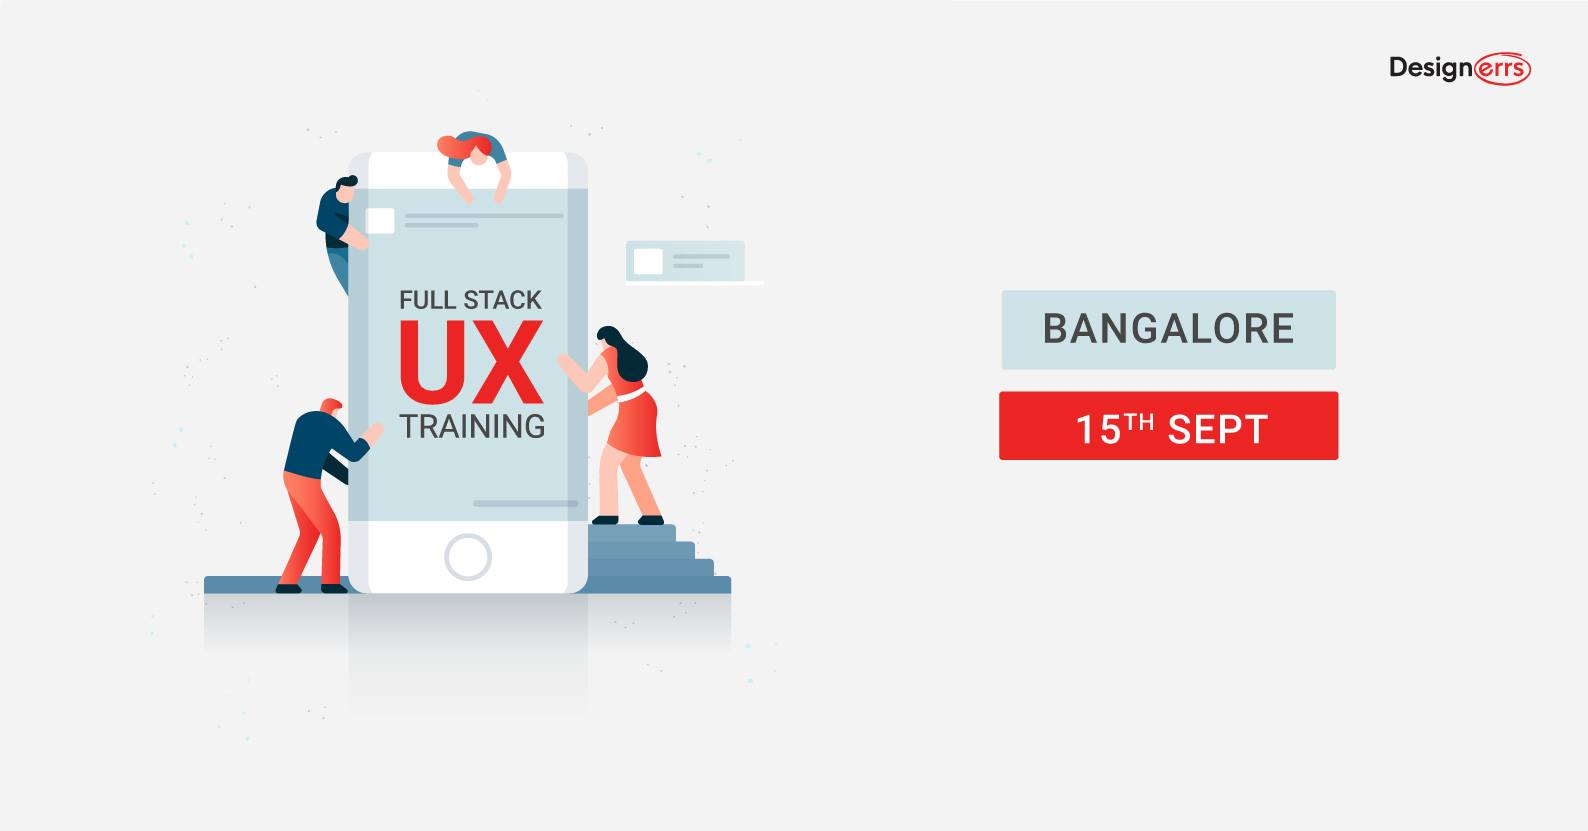 Full stack design course in Bangalore, Bangalore, Karnataka, India